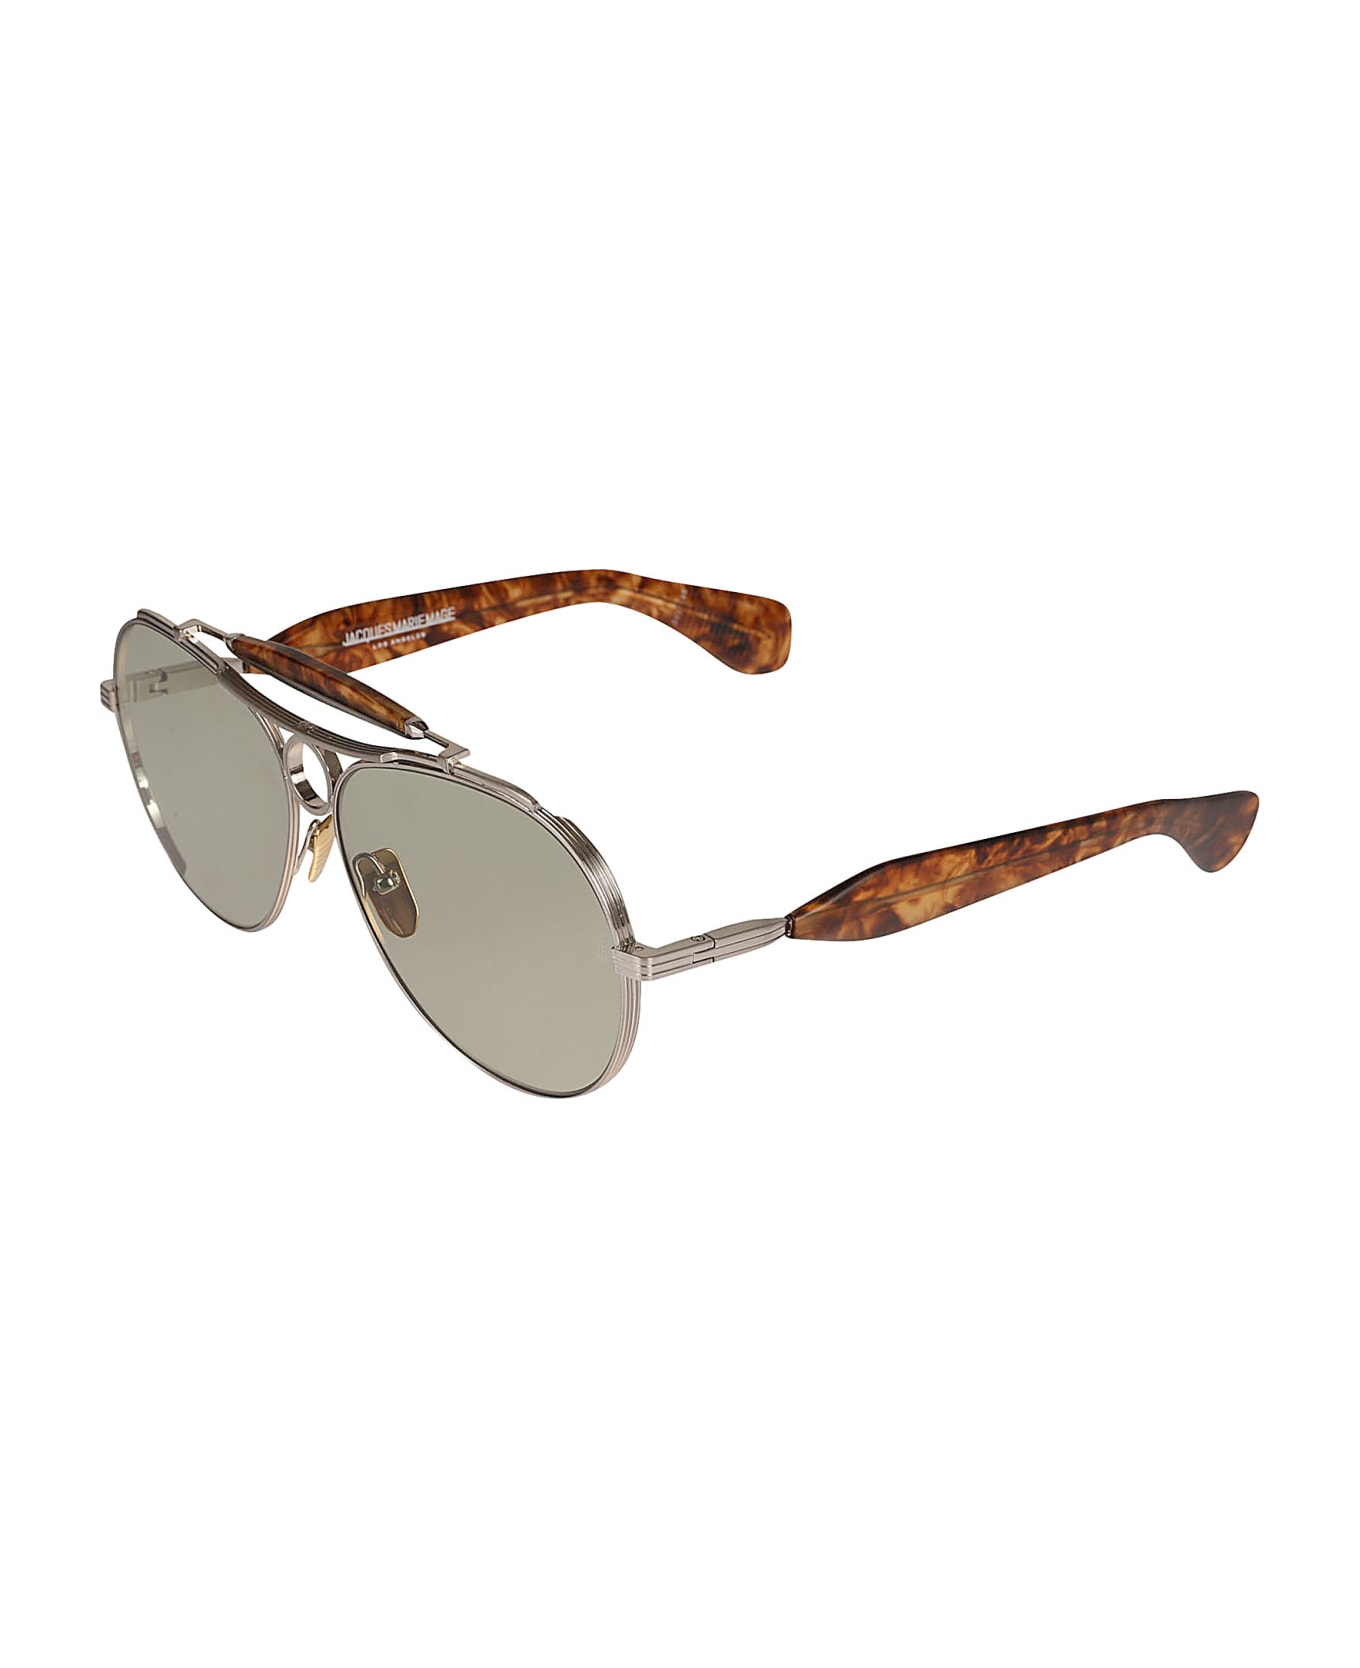 Jacques Marie Mage Aspen Sunglasses - Silver